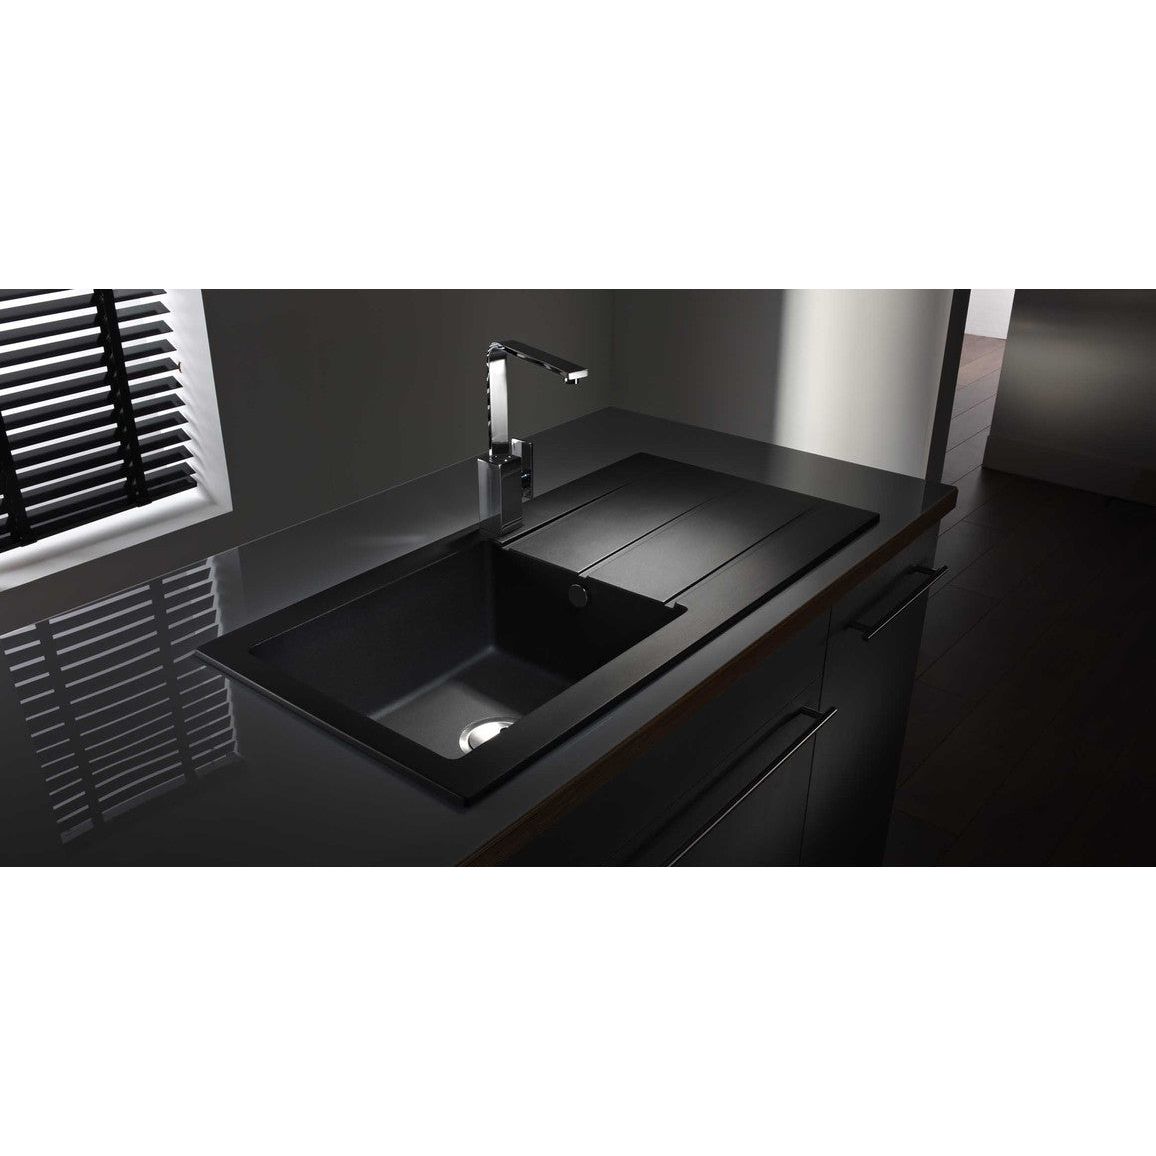 Abode Zero 1B & Double Drainer Granite Inset Sink - White